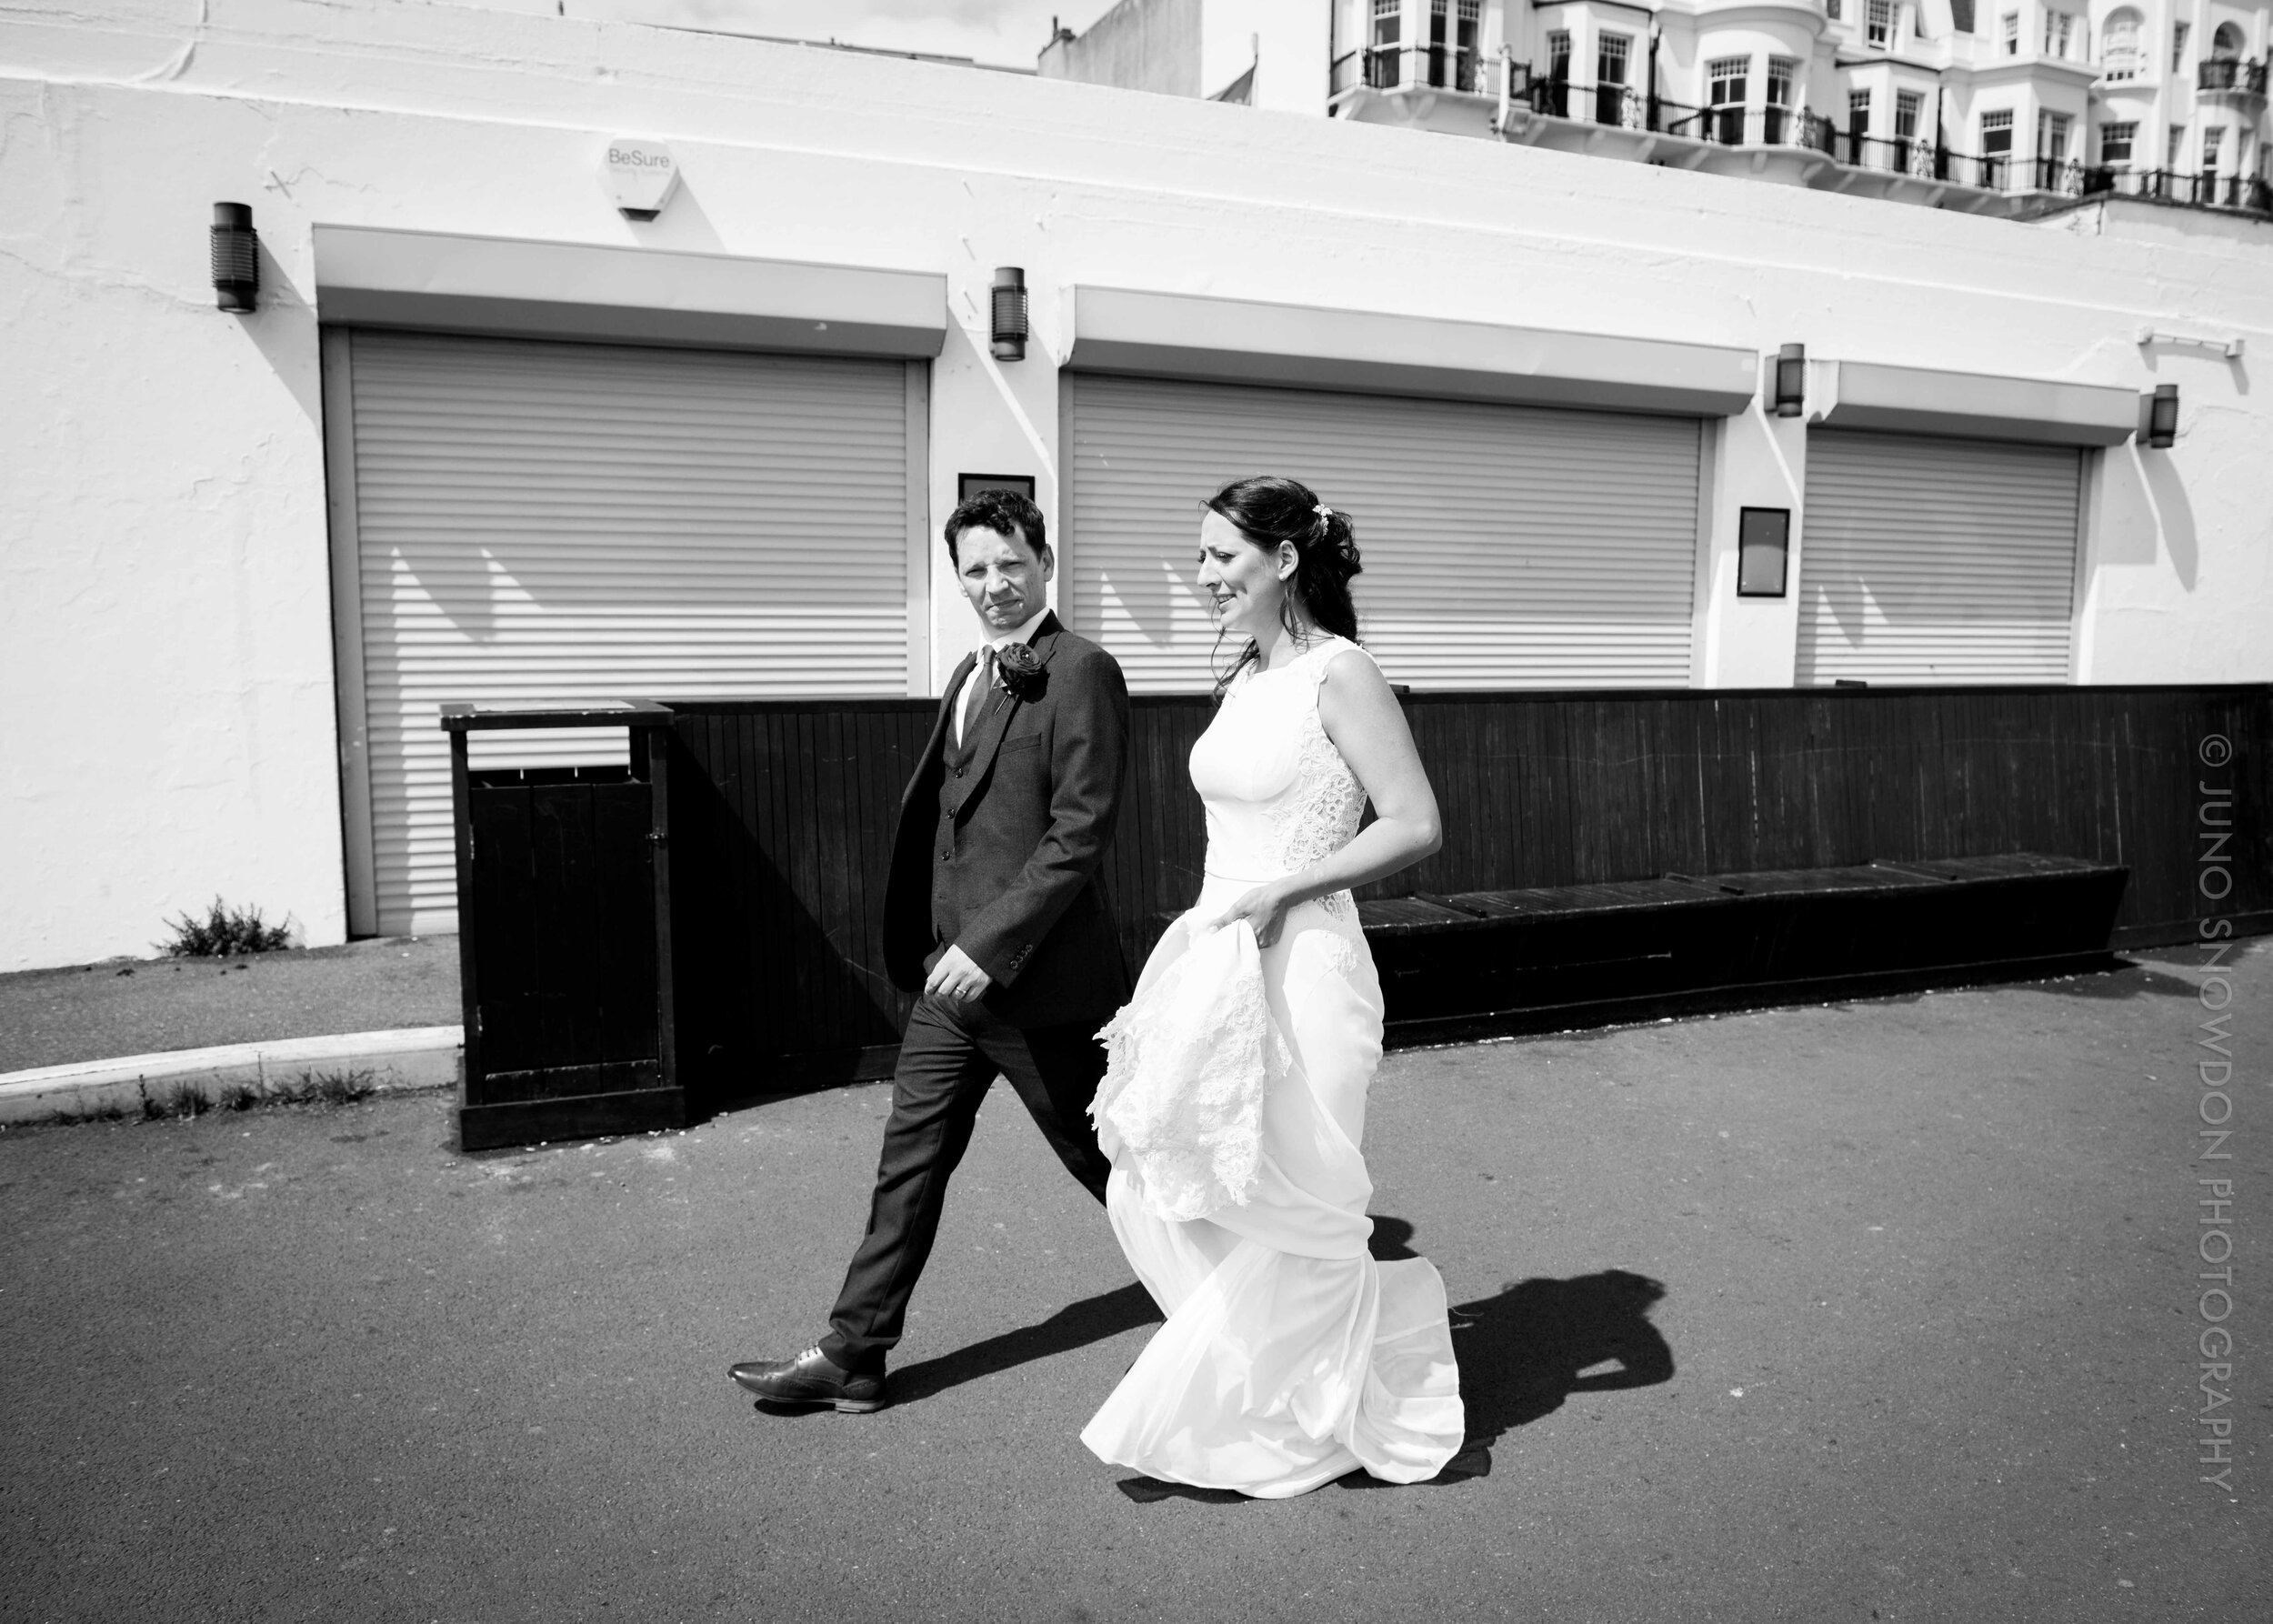 juno-snowdon-photography-wedding-7472.jpg